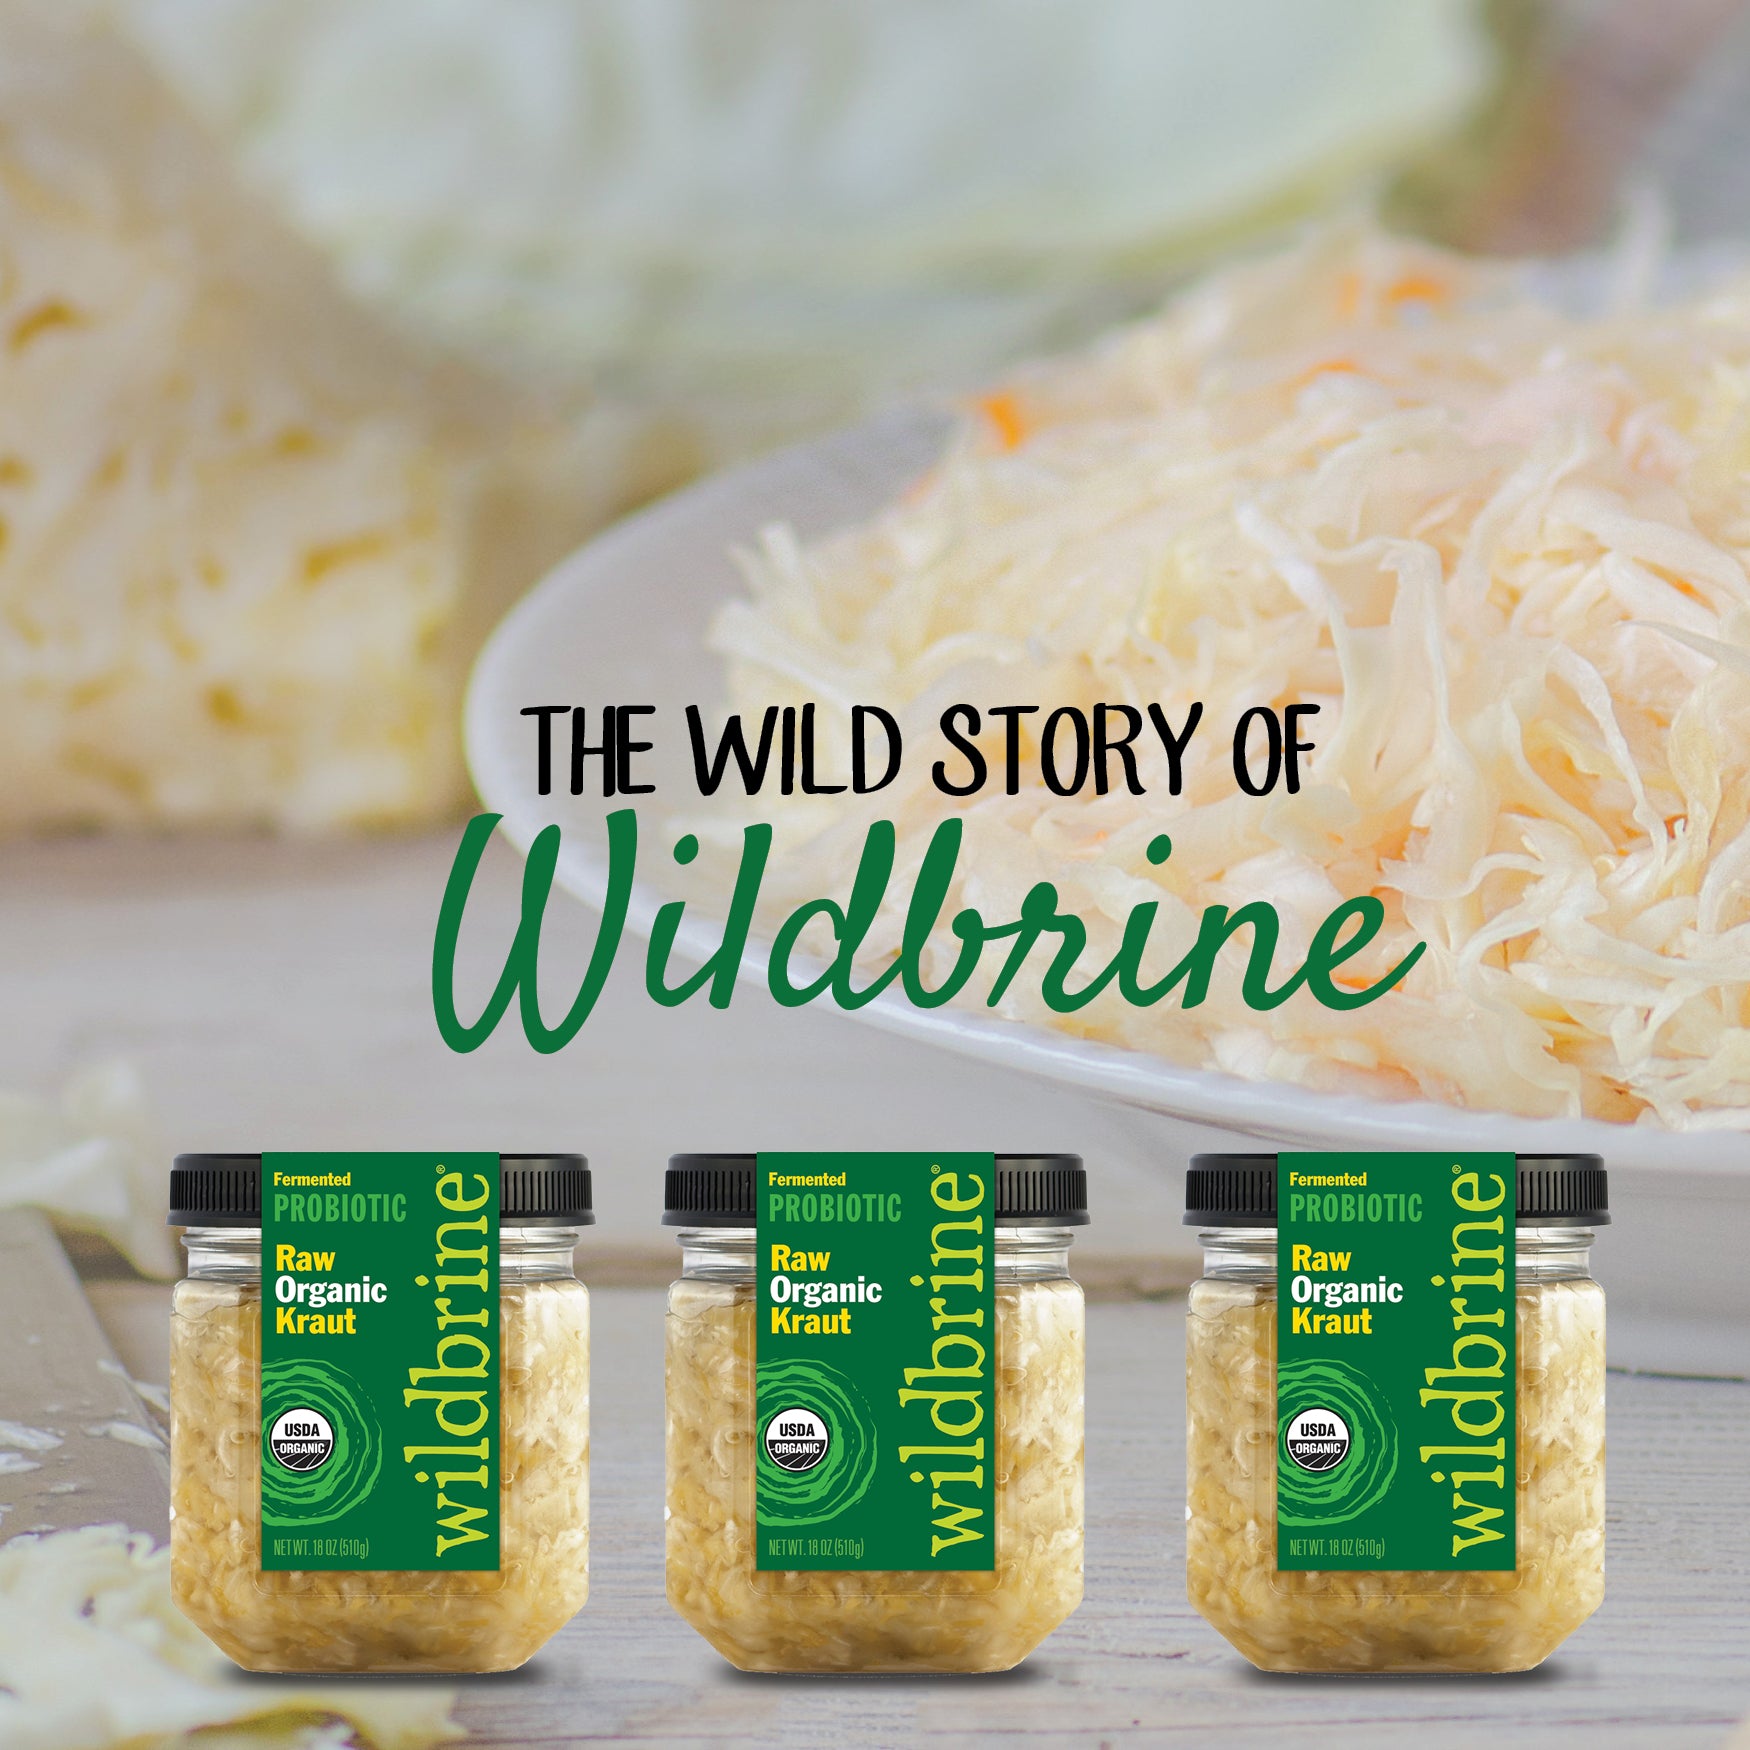 The Wild Story of Wildbrine